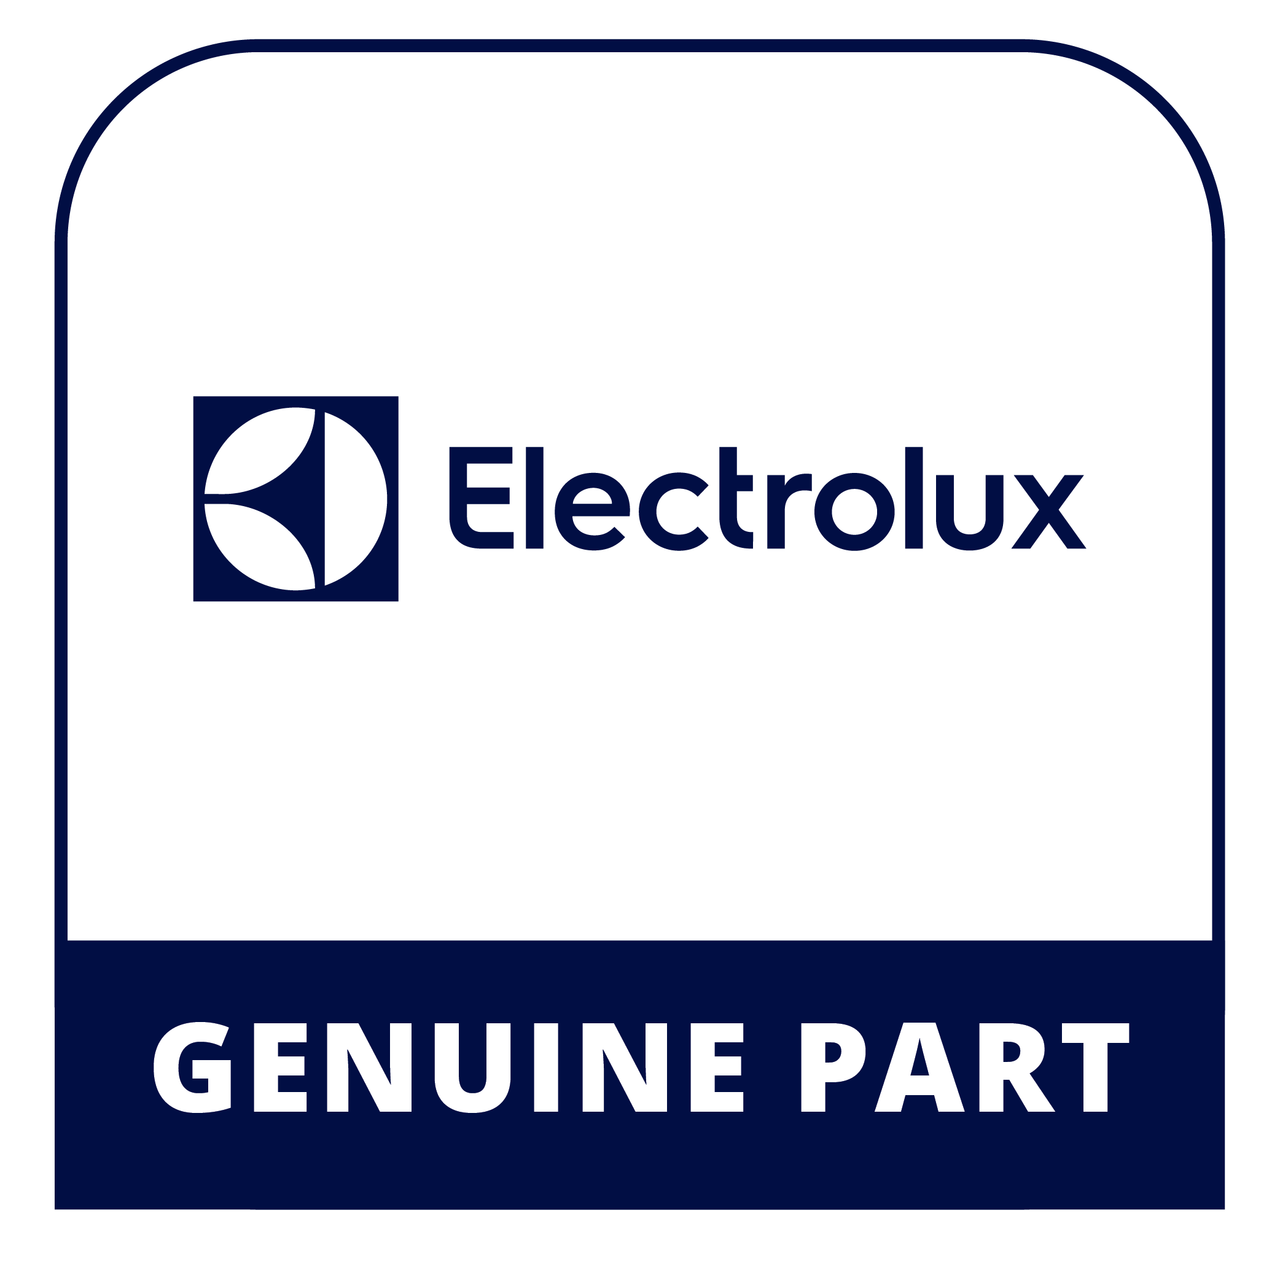 Frigidaire - Electrolux 242075501 - Ss Handle Set - Genuine Electrolux Part